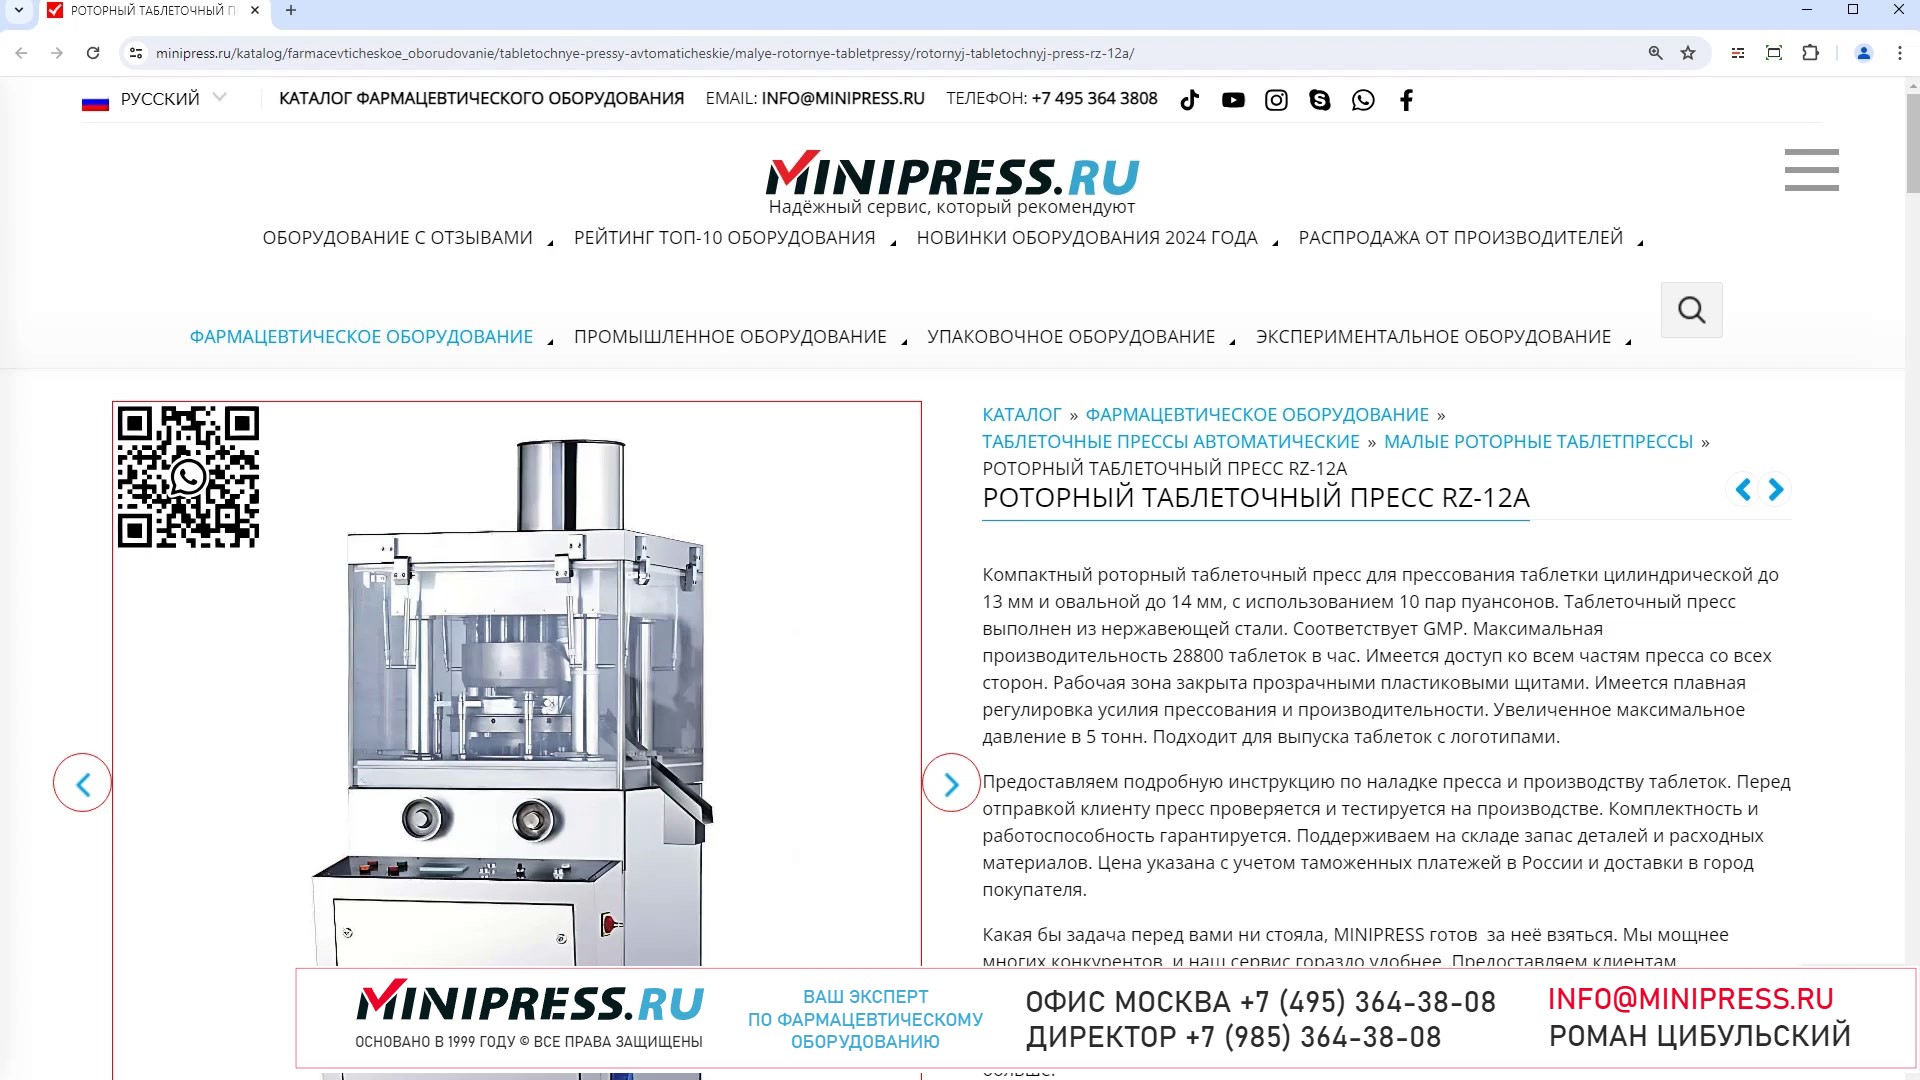 Minipress.ru Роторный таблеточный пресс RZ-12A